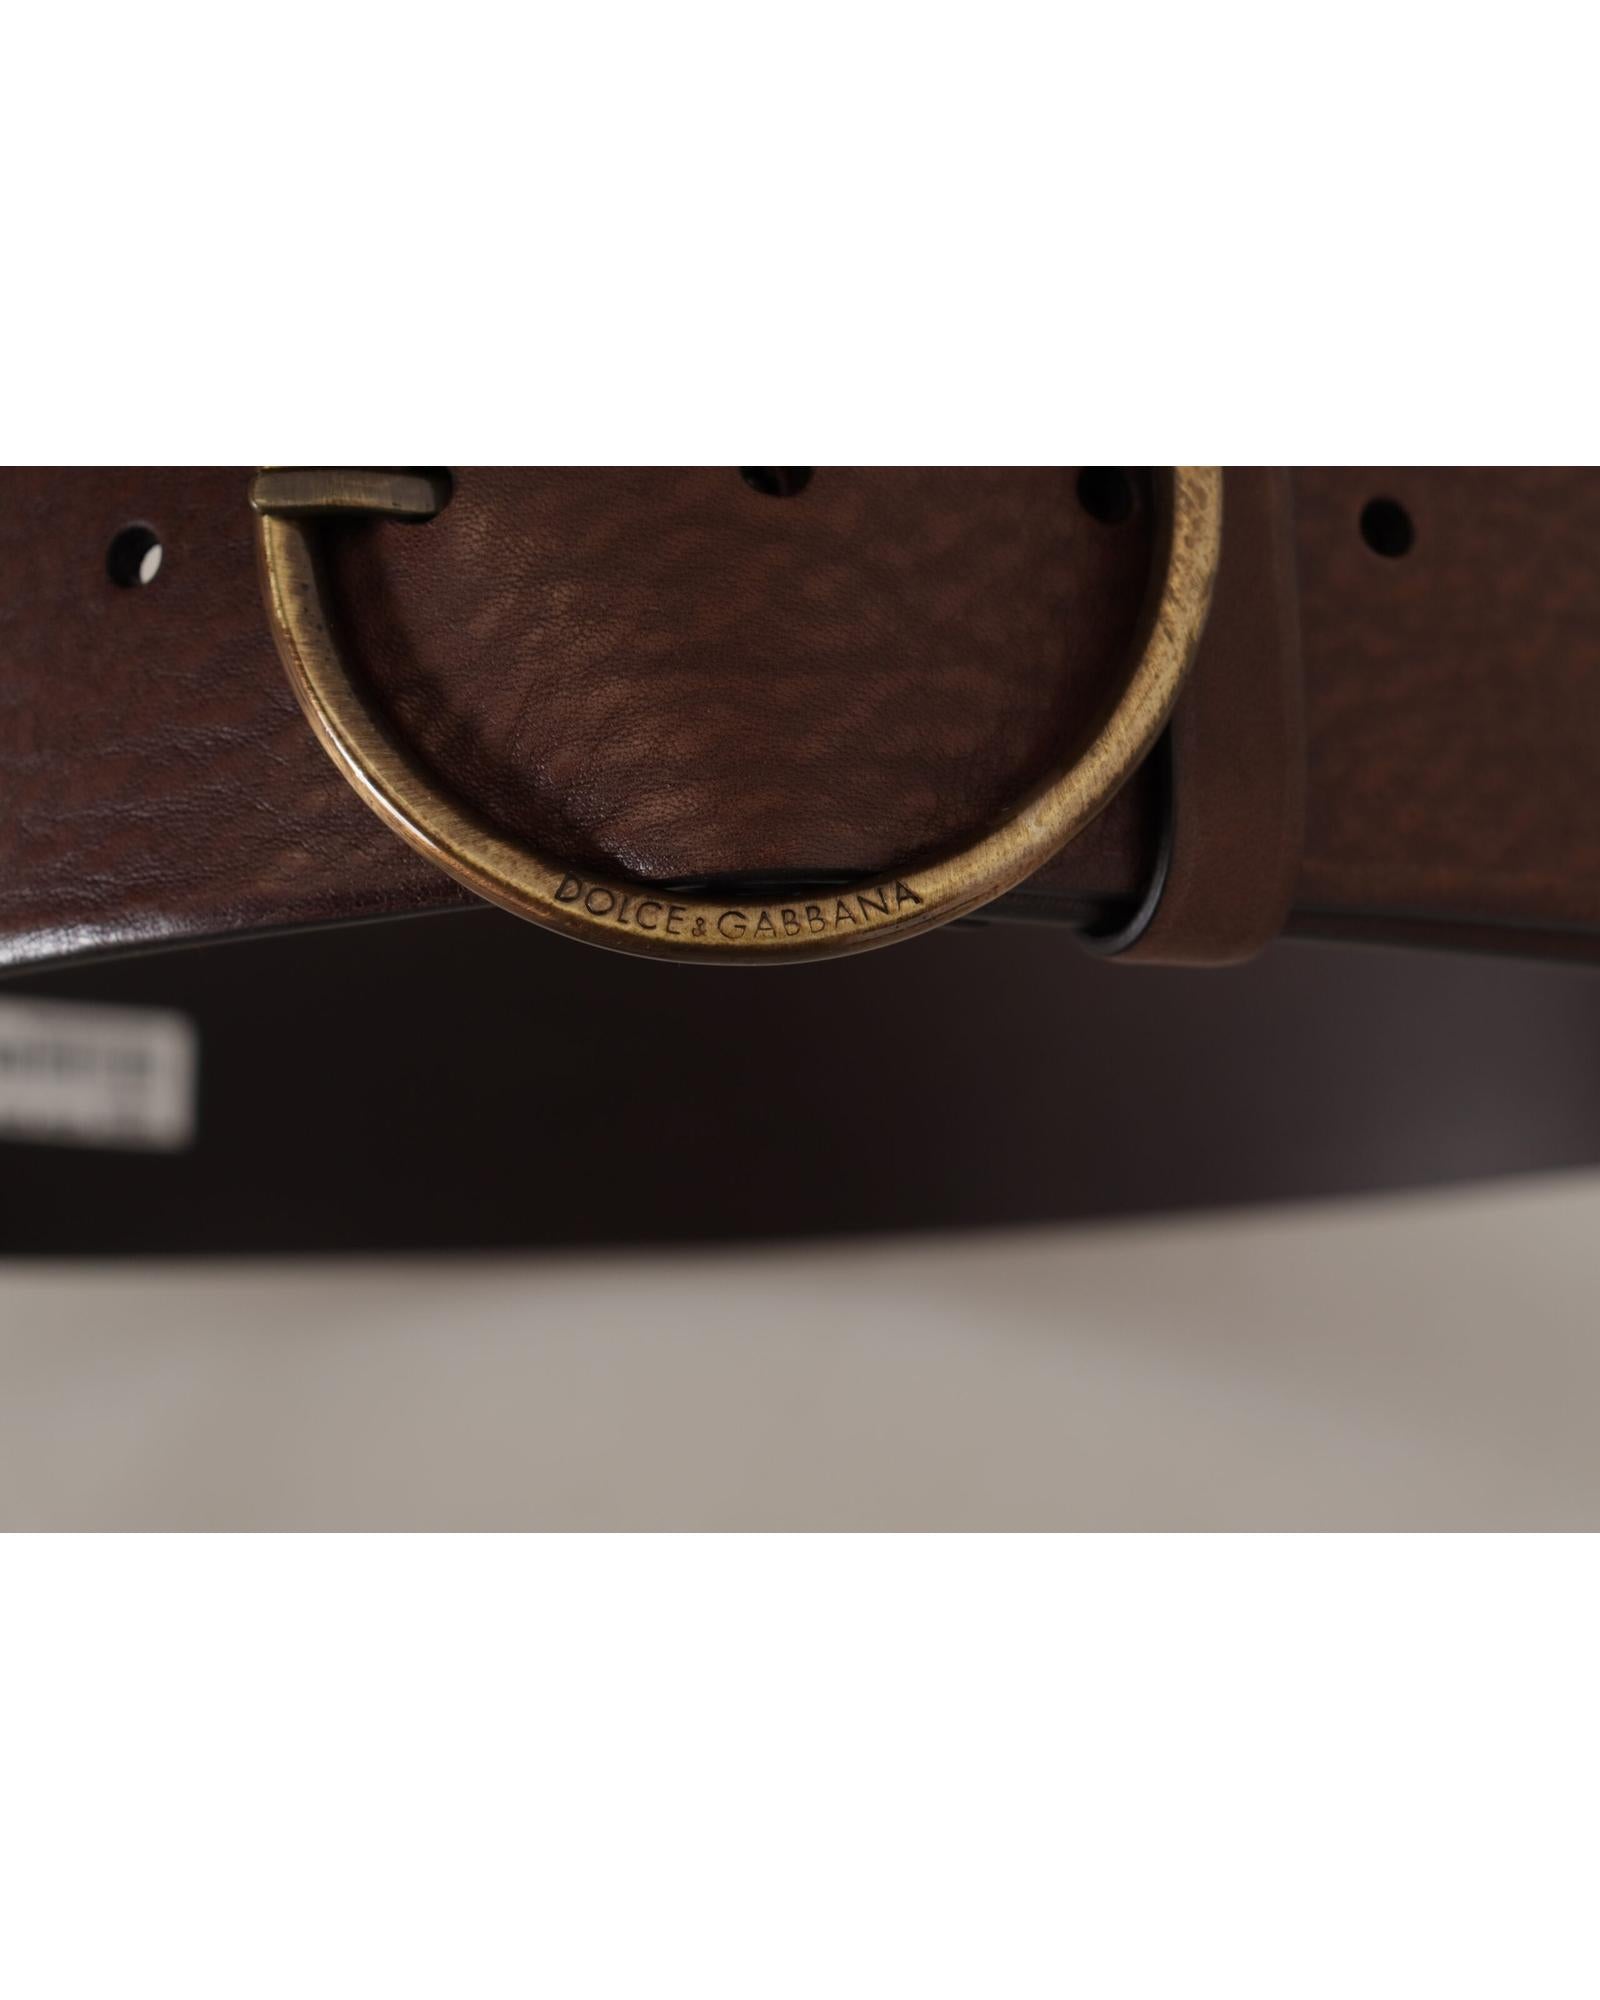 Authentic Dolce & Gabbana Logo Engraved Leather Belt 90 cm Women